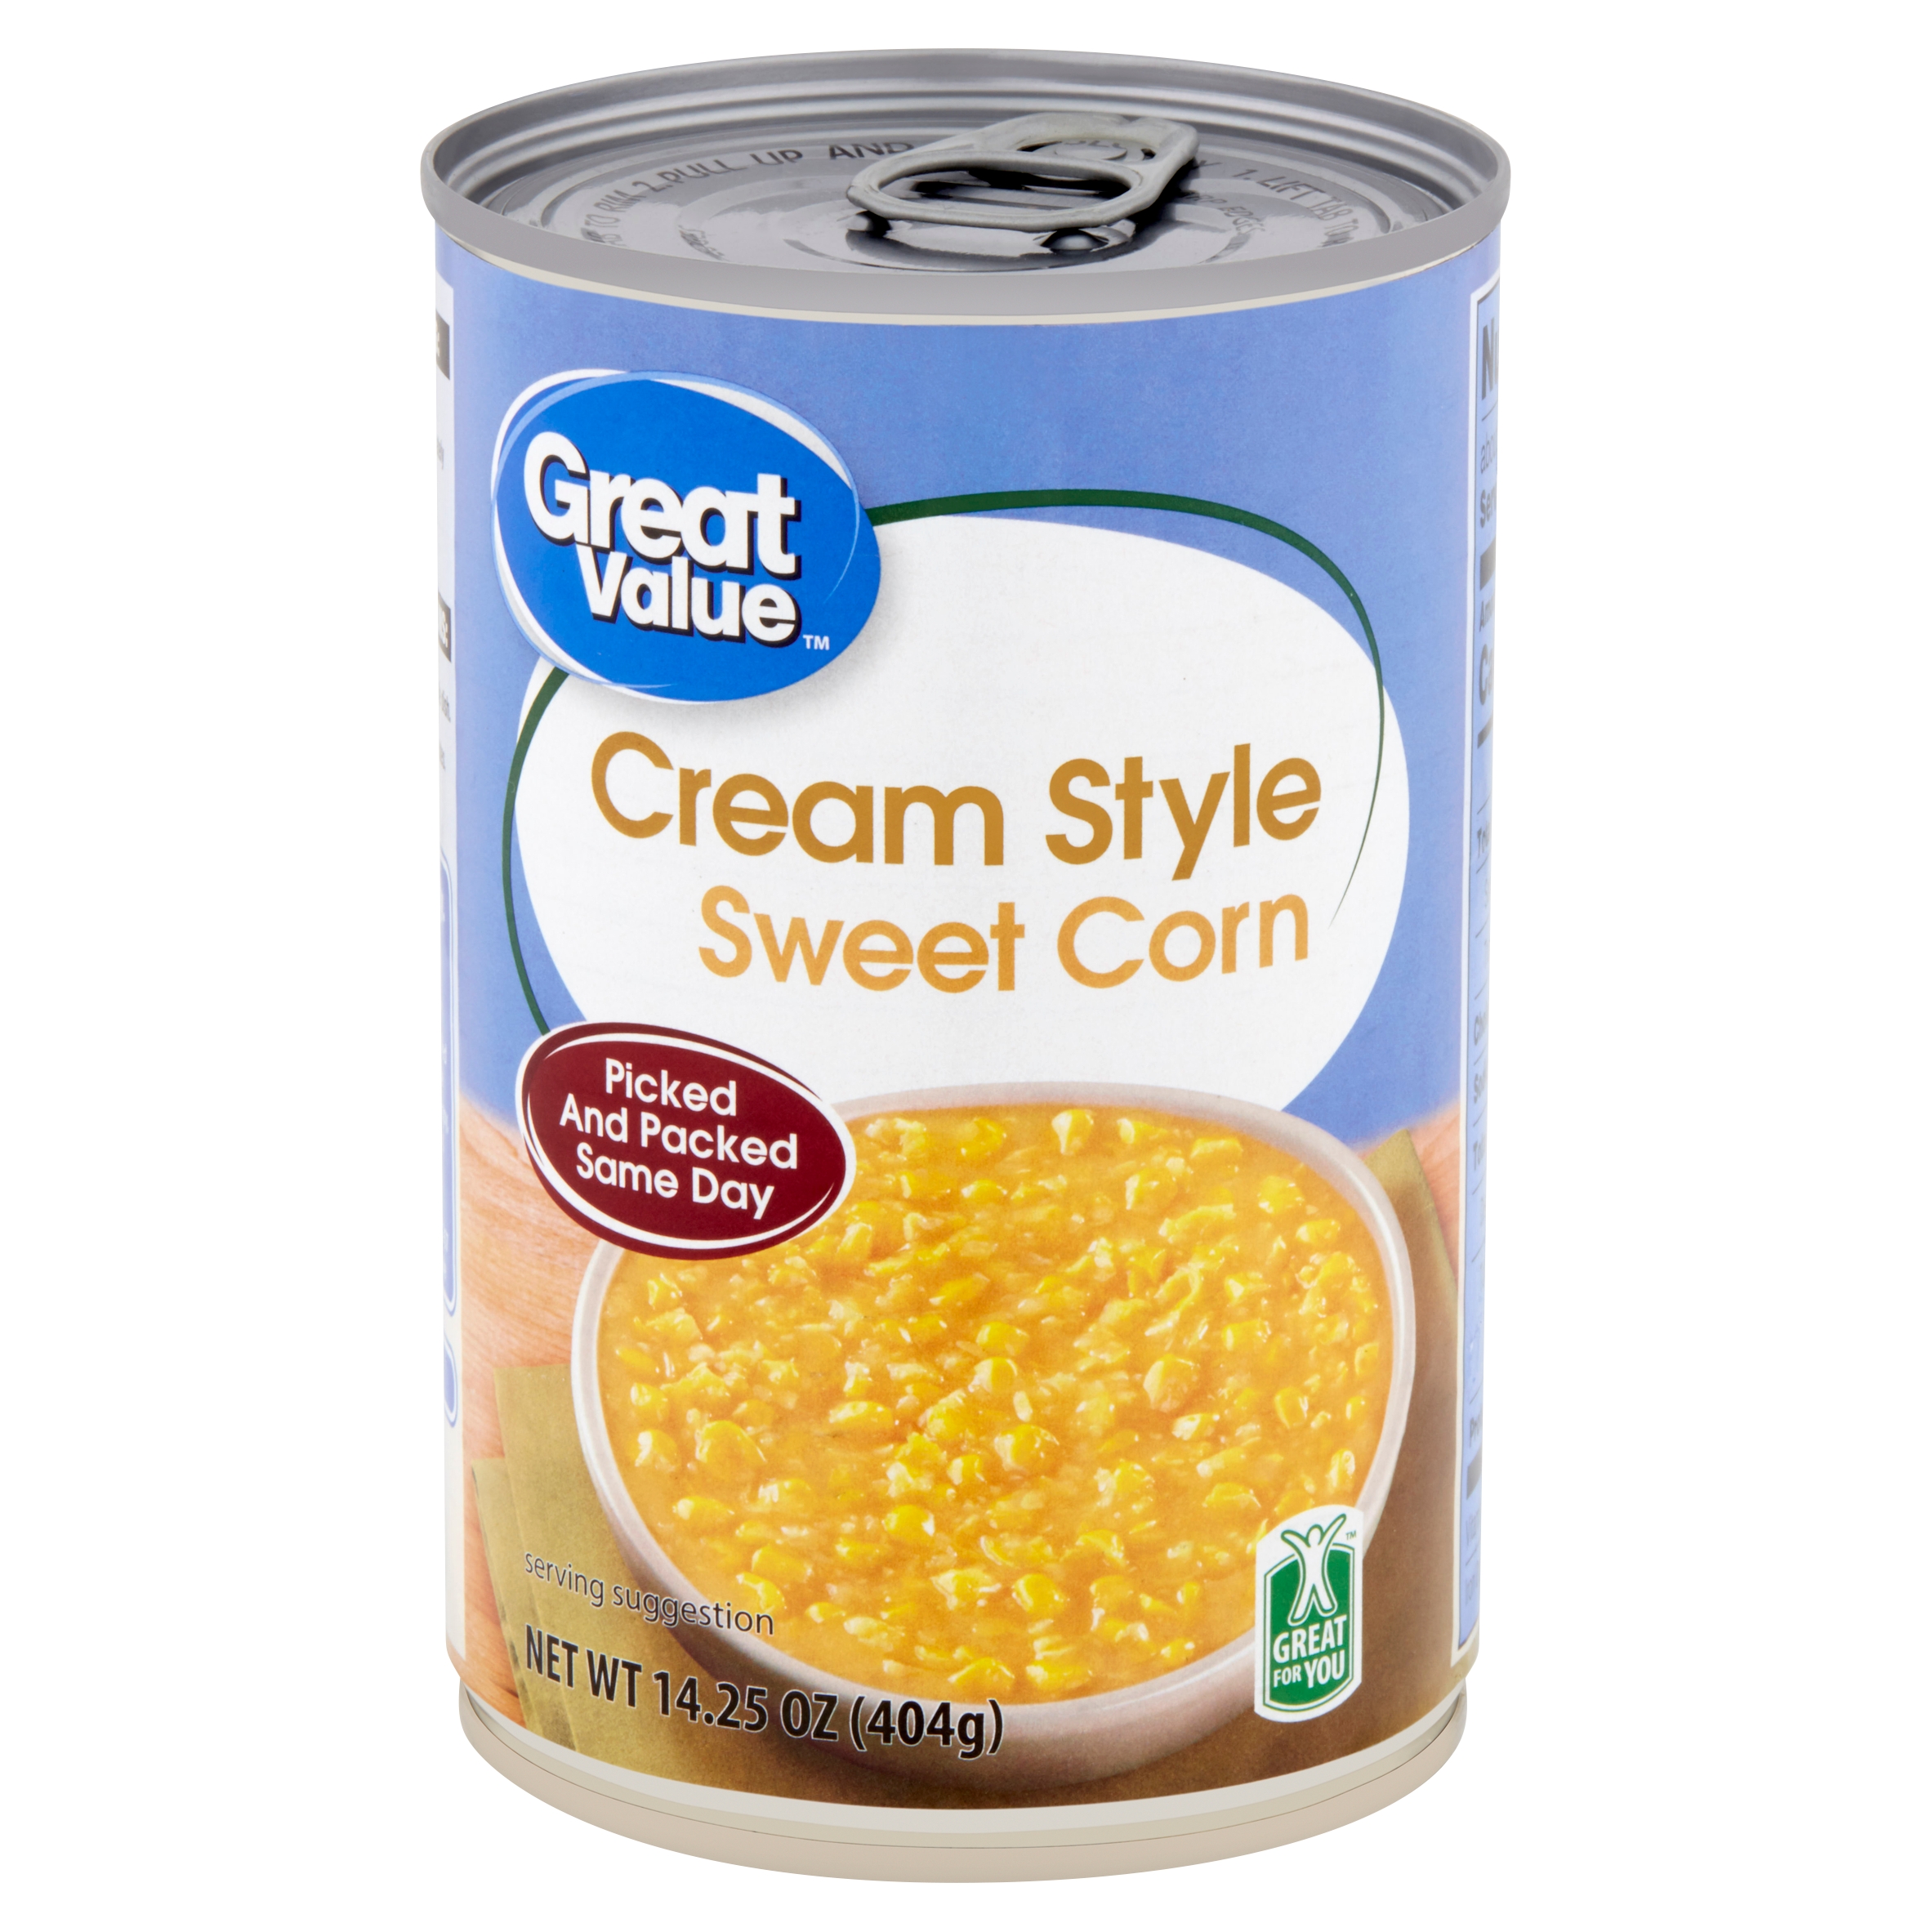 Great Value Cream Style Sweet Corn, 14.25 Oz